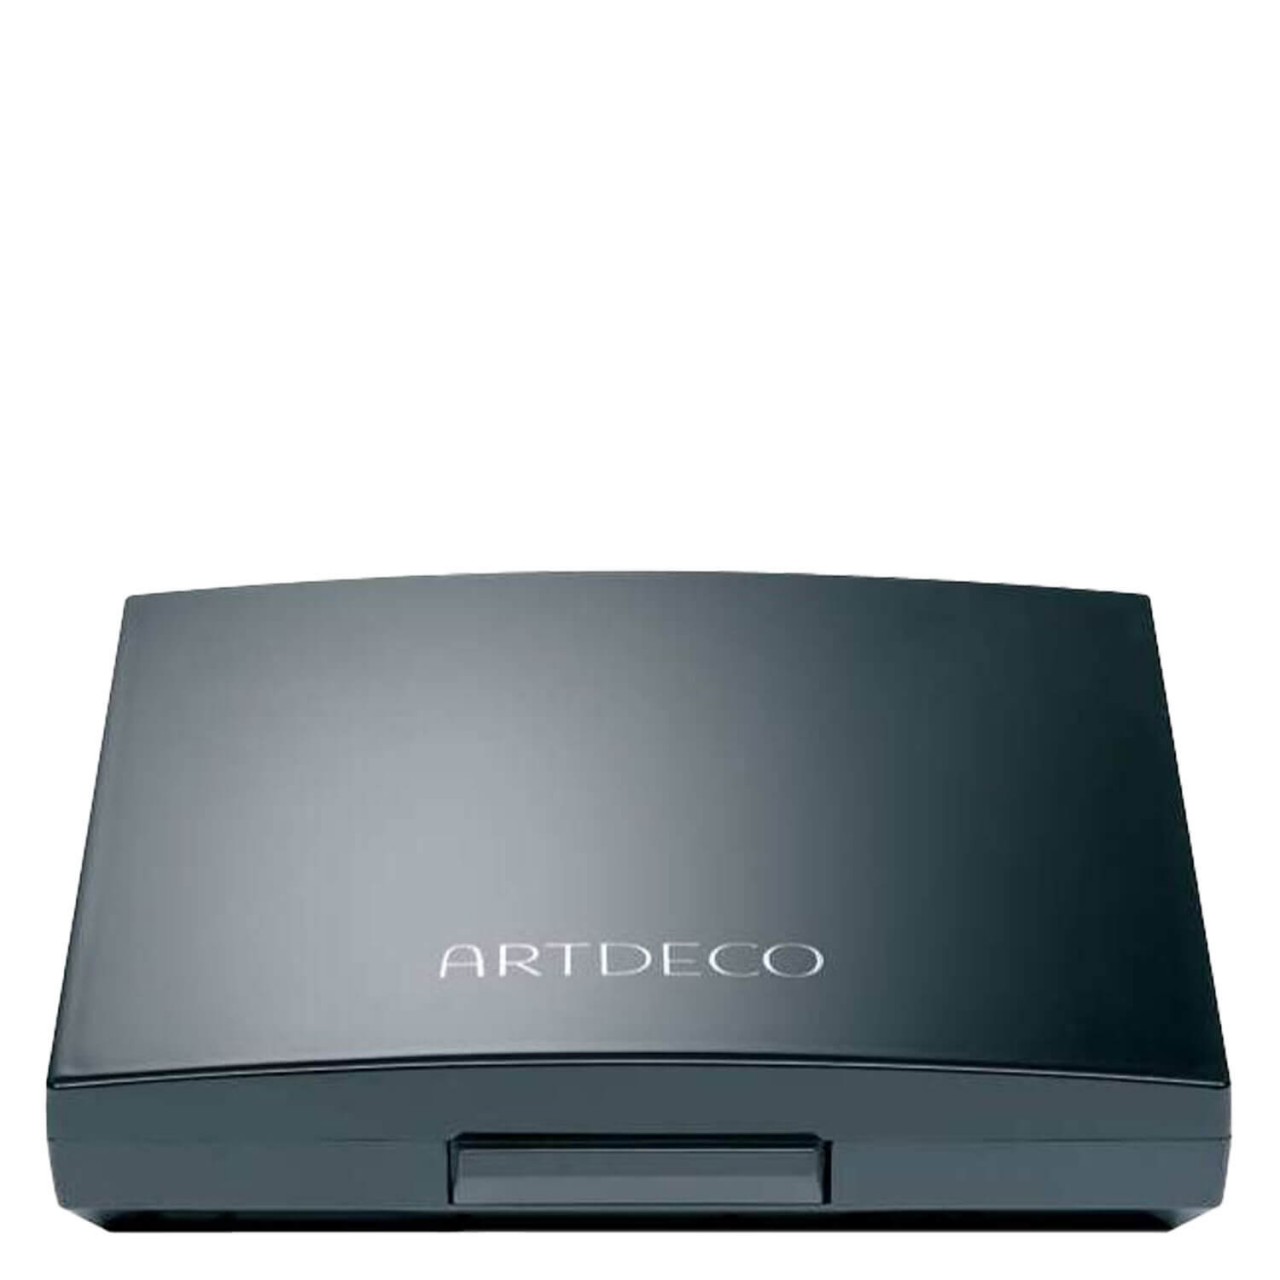 Artdeco Tools - Beauty Box Quadrat von Artdeco